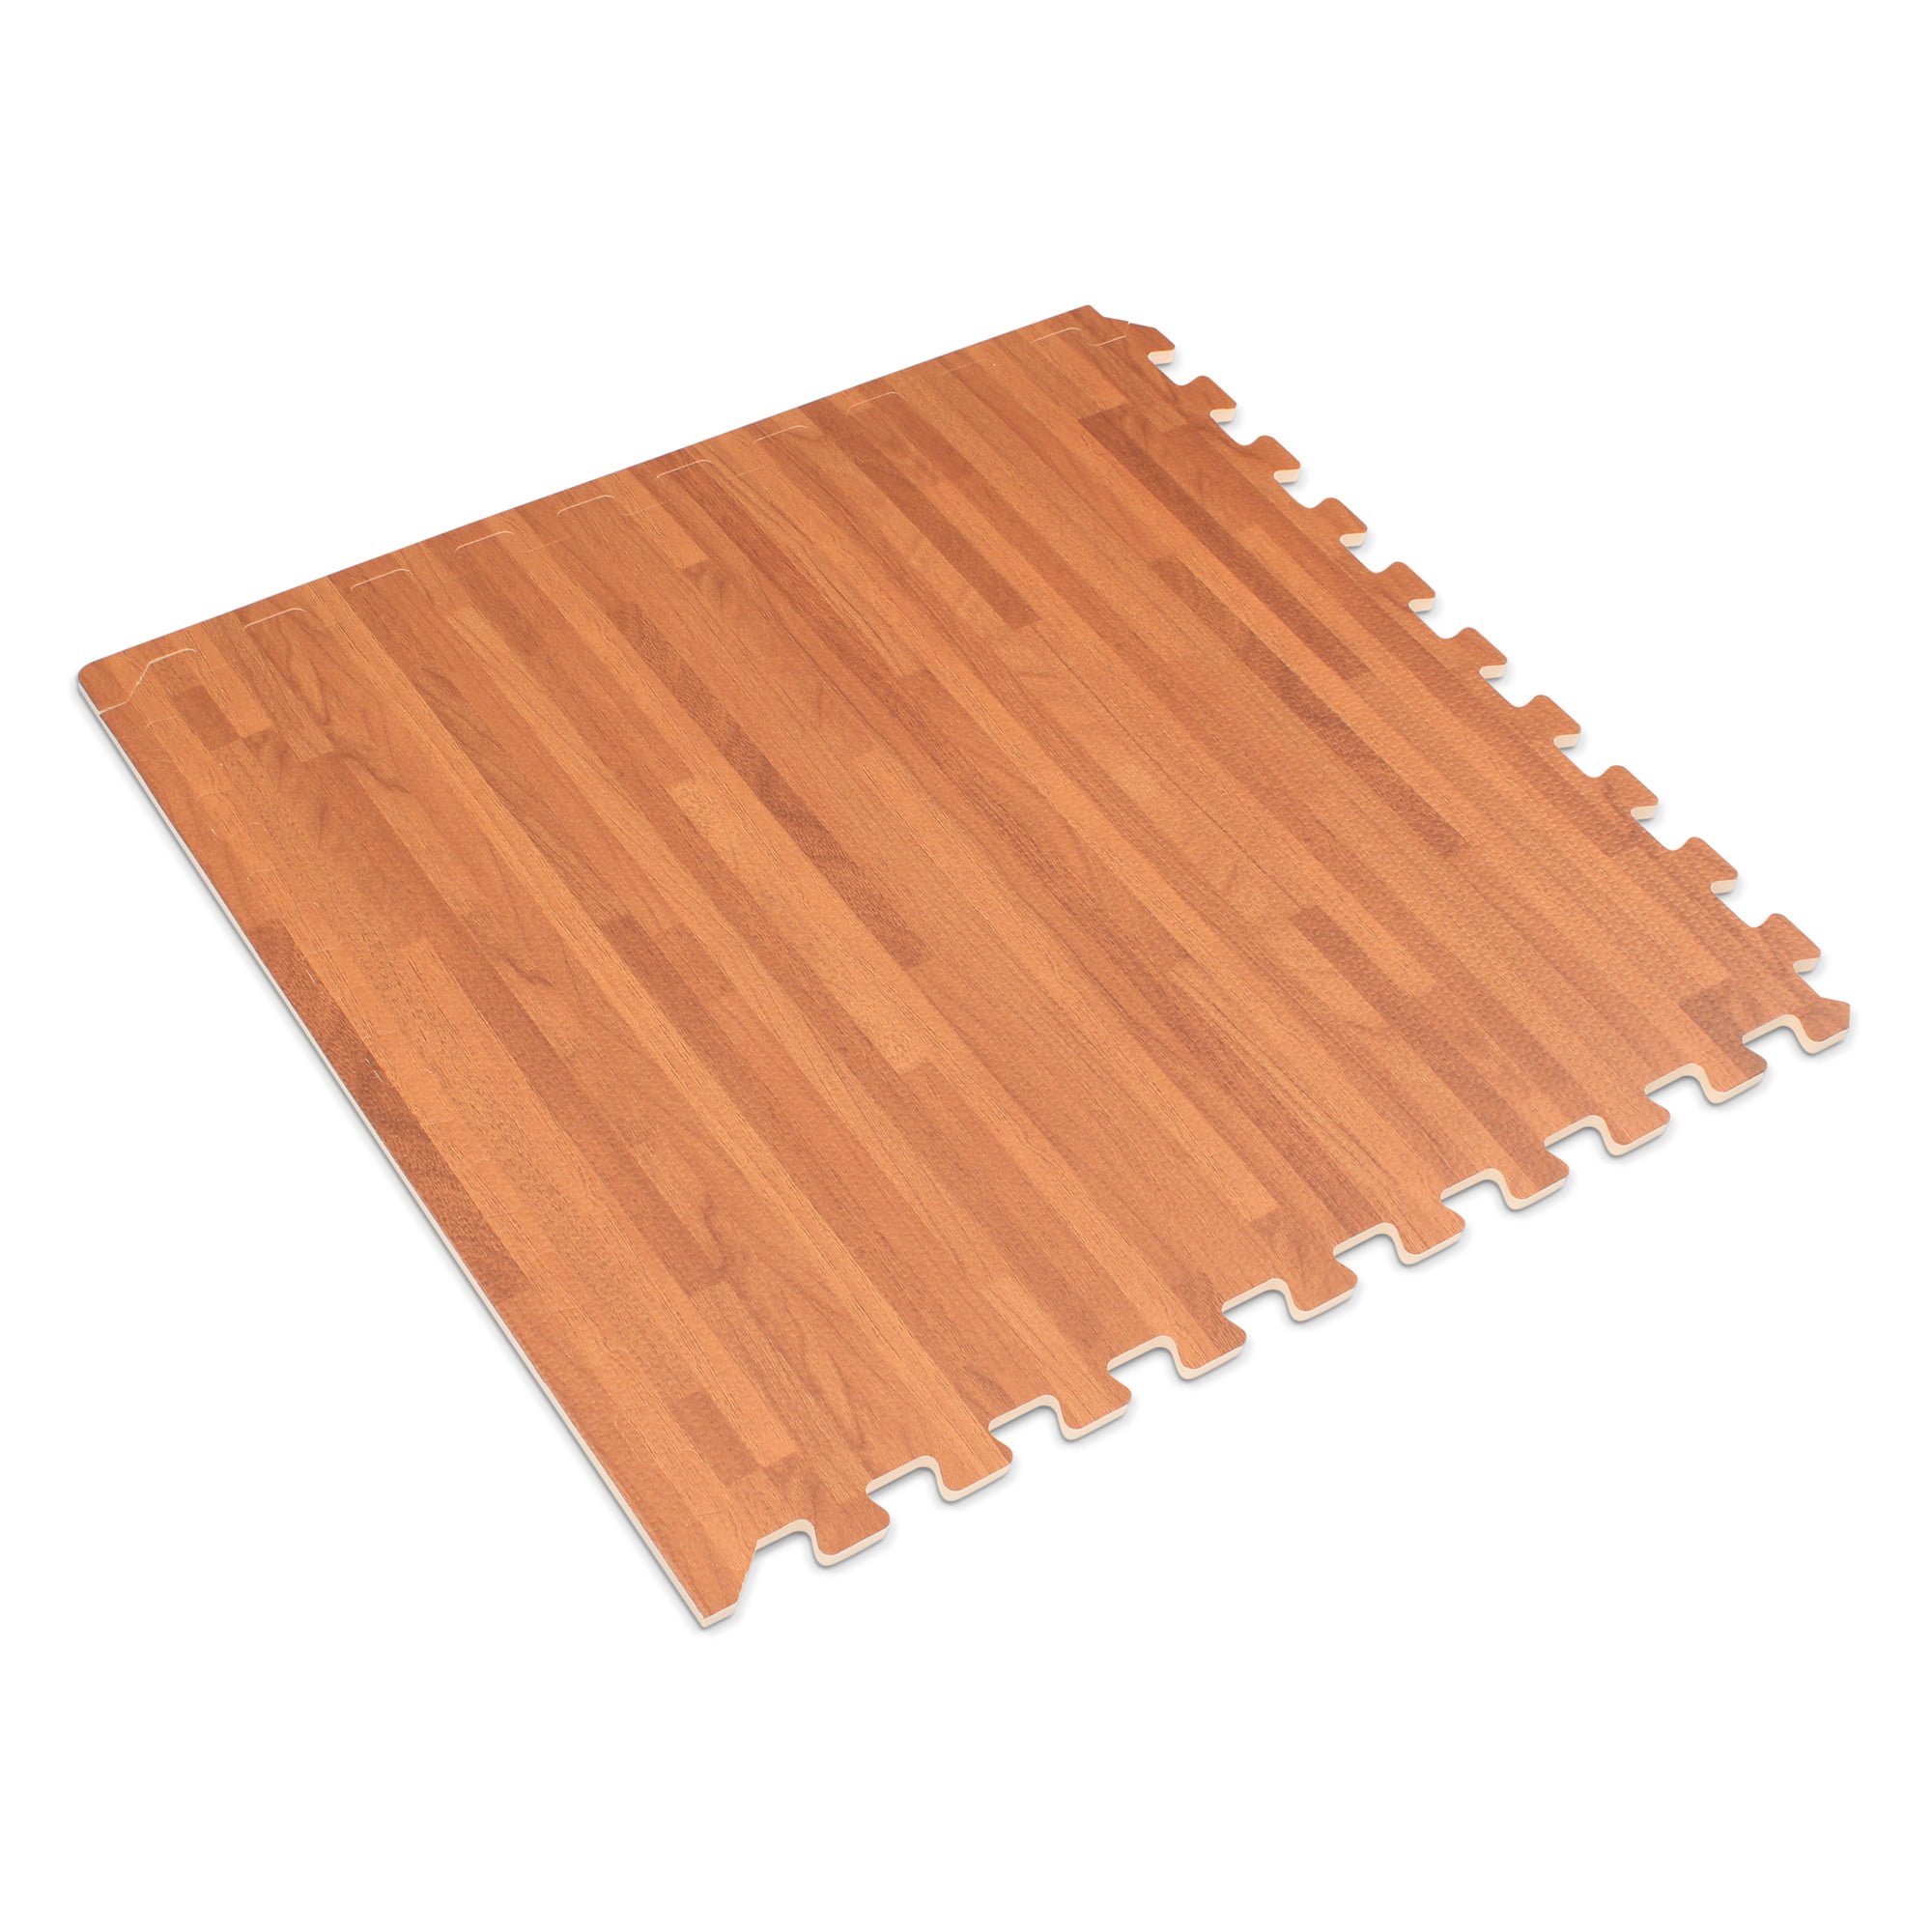 144 ft walnut dark wood grain interlocking foam puzzle tiles mat puzzle floorin 